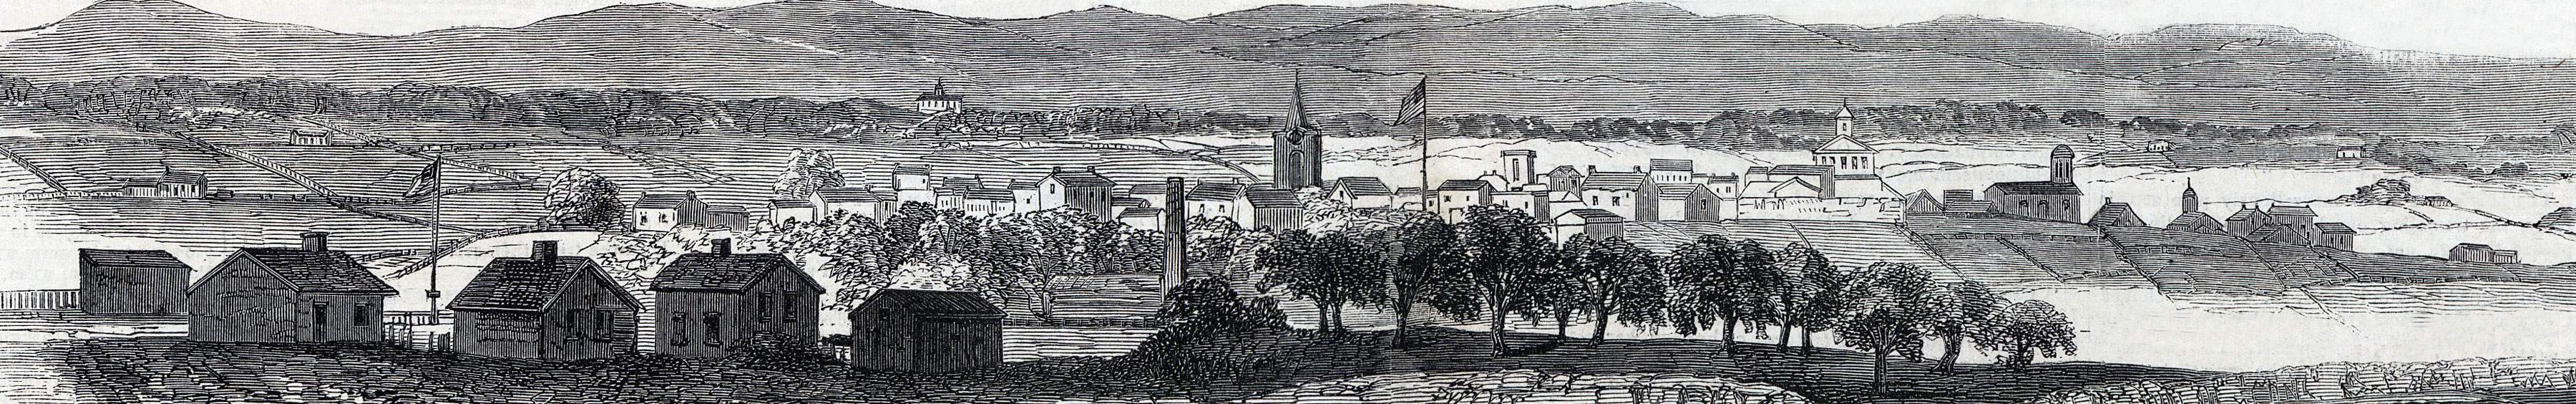 Gettysburg, Pennsylvania, November 19, 1863, artist's impression, zoomable image